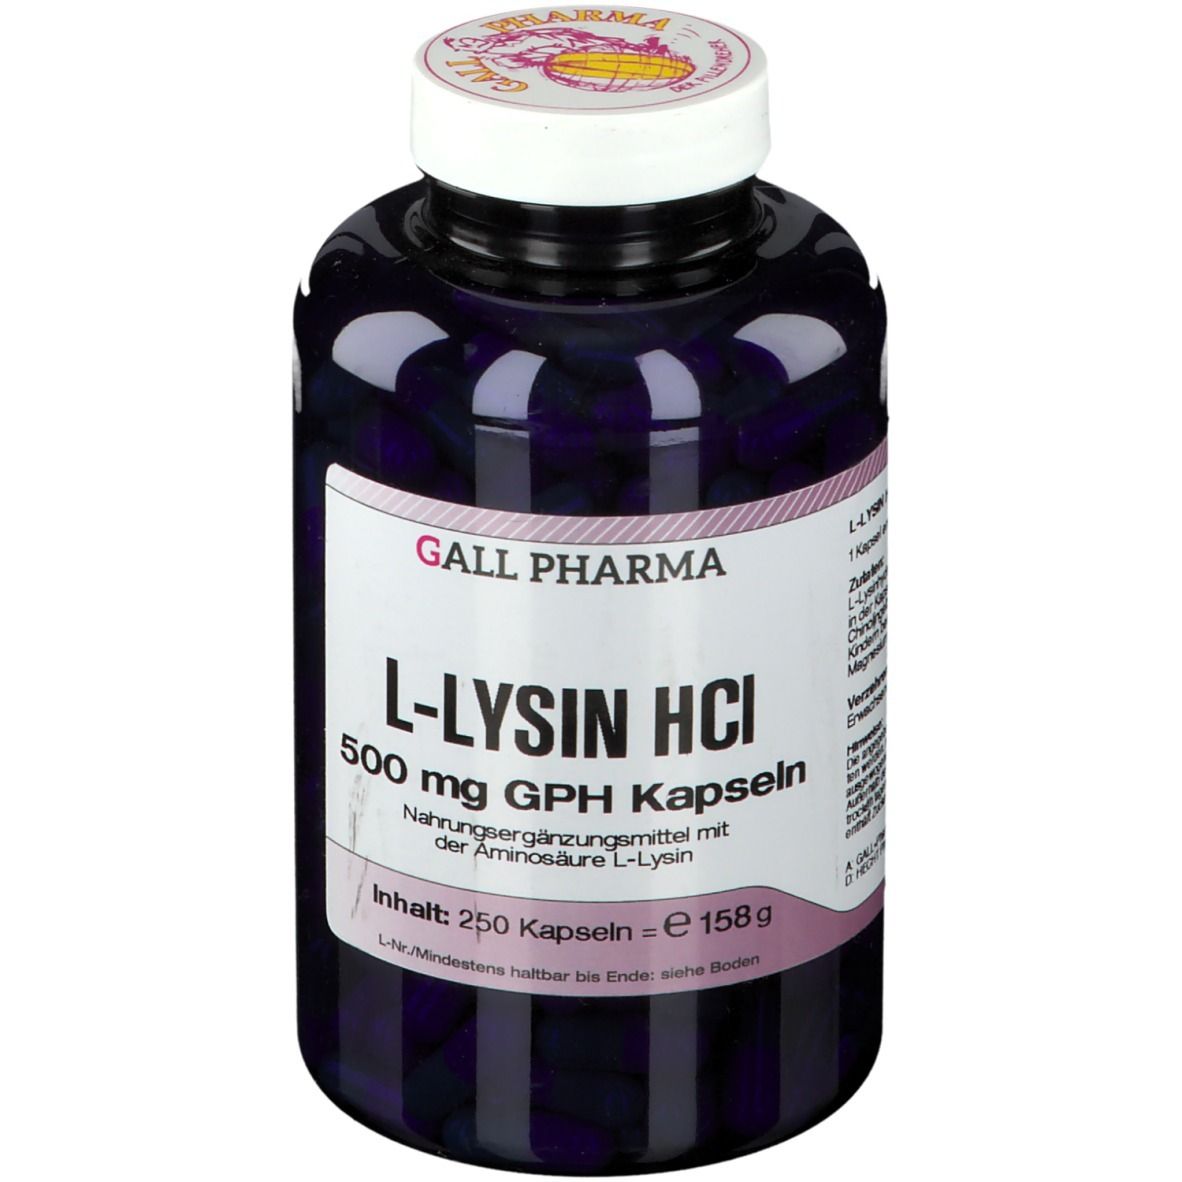 Image of GALL PHARMA L-Lysin HCl 500 mg GPH Kapseln